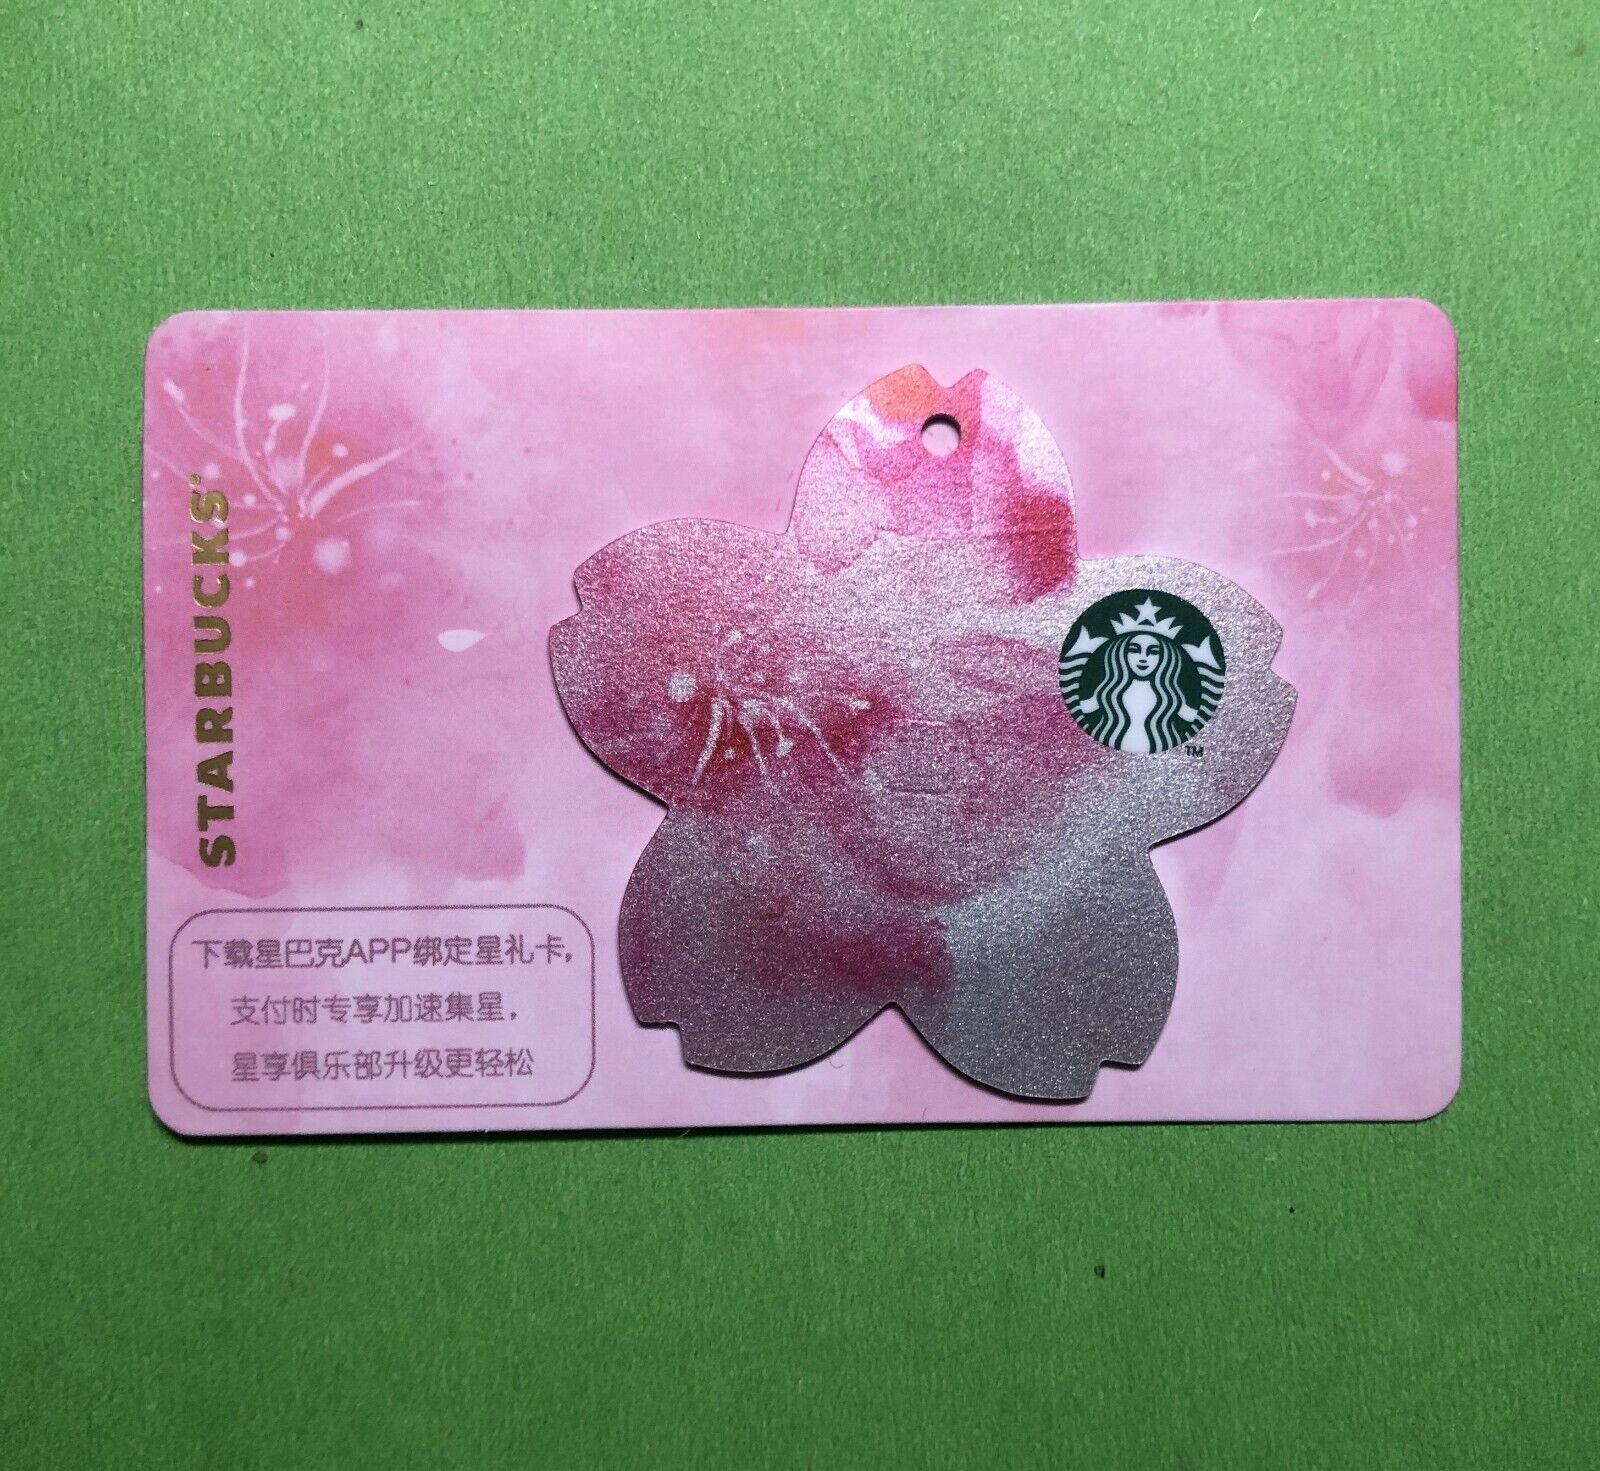 CS1917 2019 China Starbucks coffee Cherry Die-cut Pink gift card ￥300 1pc